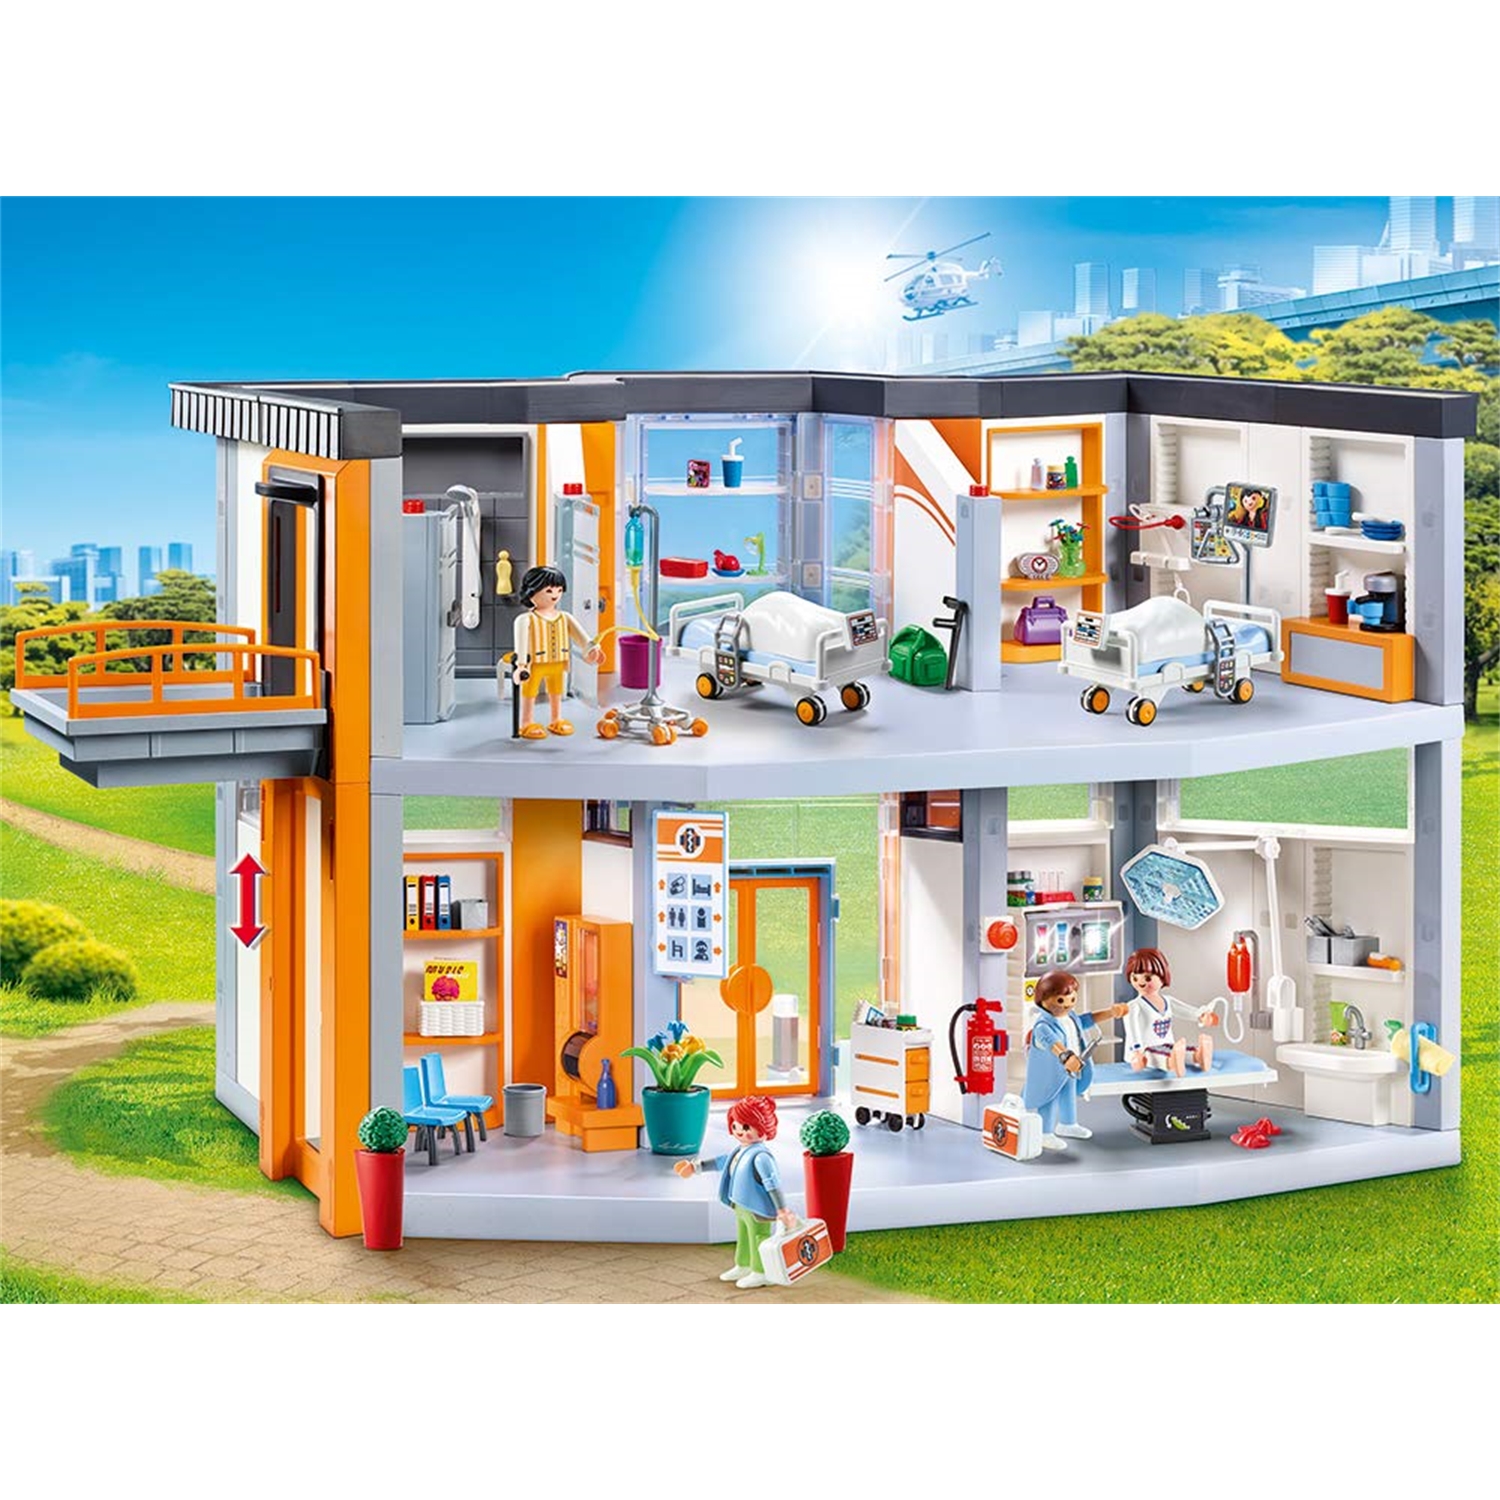 Playmobil Kinder-Krankenzimmer City Life NEU OVP Krankenhaus 6444 